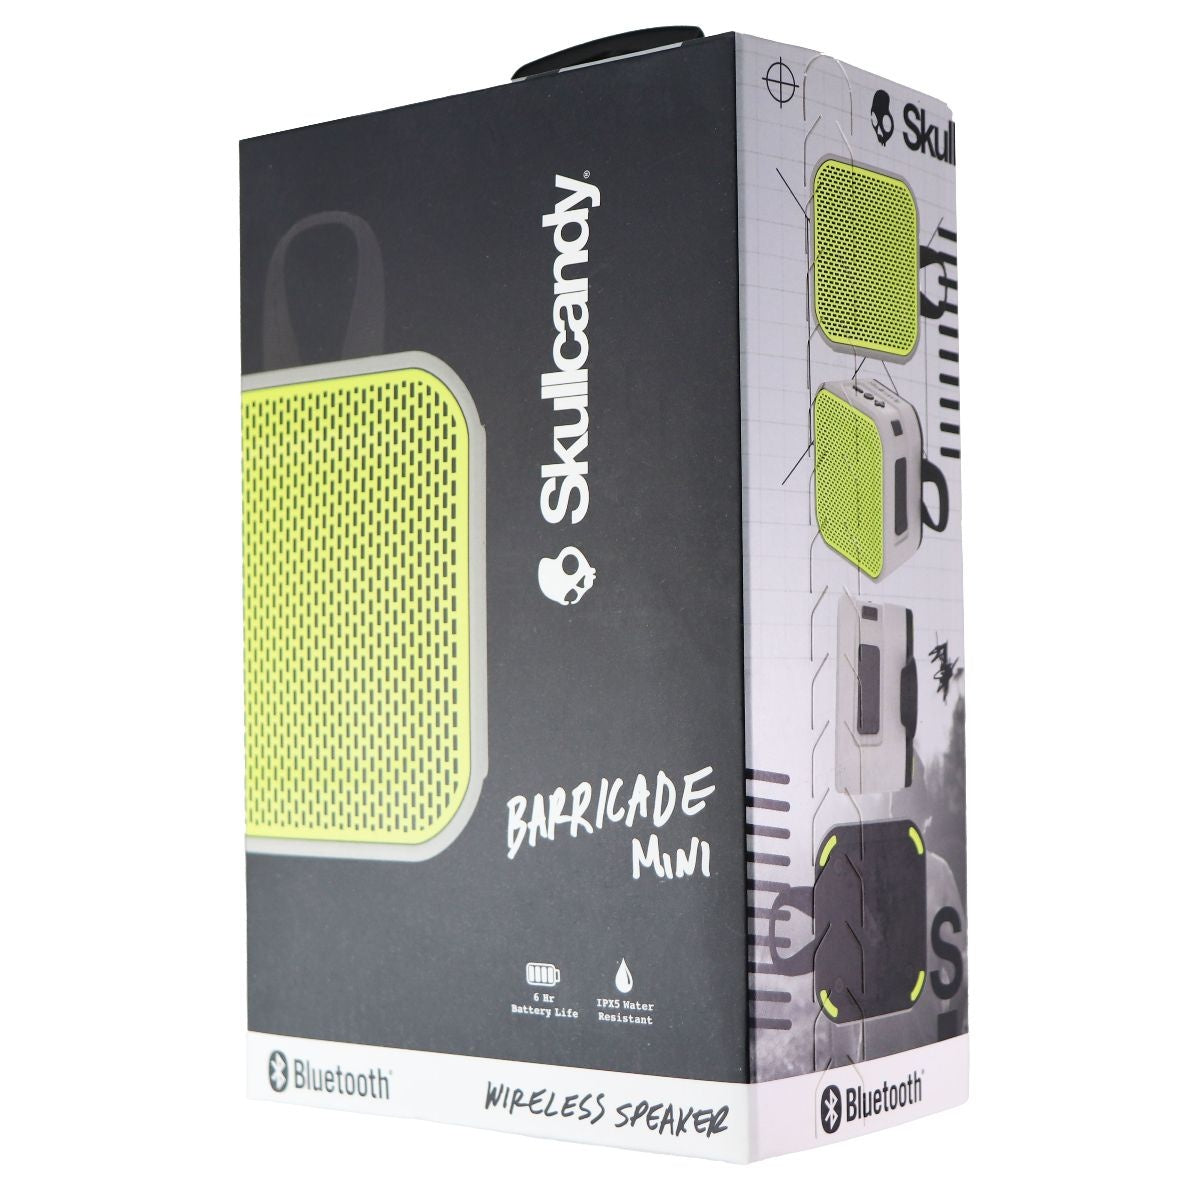 Skullcandy Barricade Mini Bluetooth Wireless Portable Speaker - Gray/Hot Lime Cell Phone - Audio Docks & Speakers Skullcandy    - Simple Cell Bulk Wholesale Pricing - USA Seller